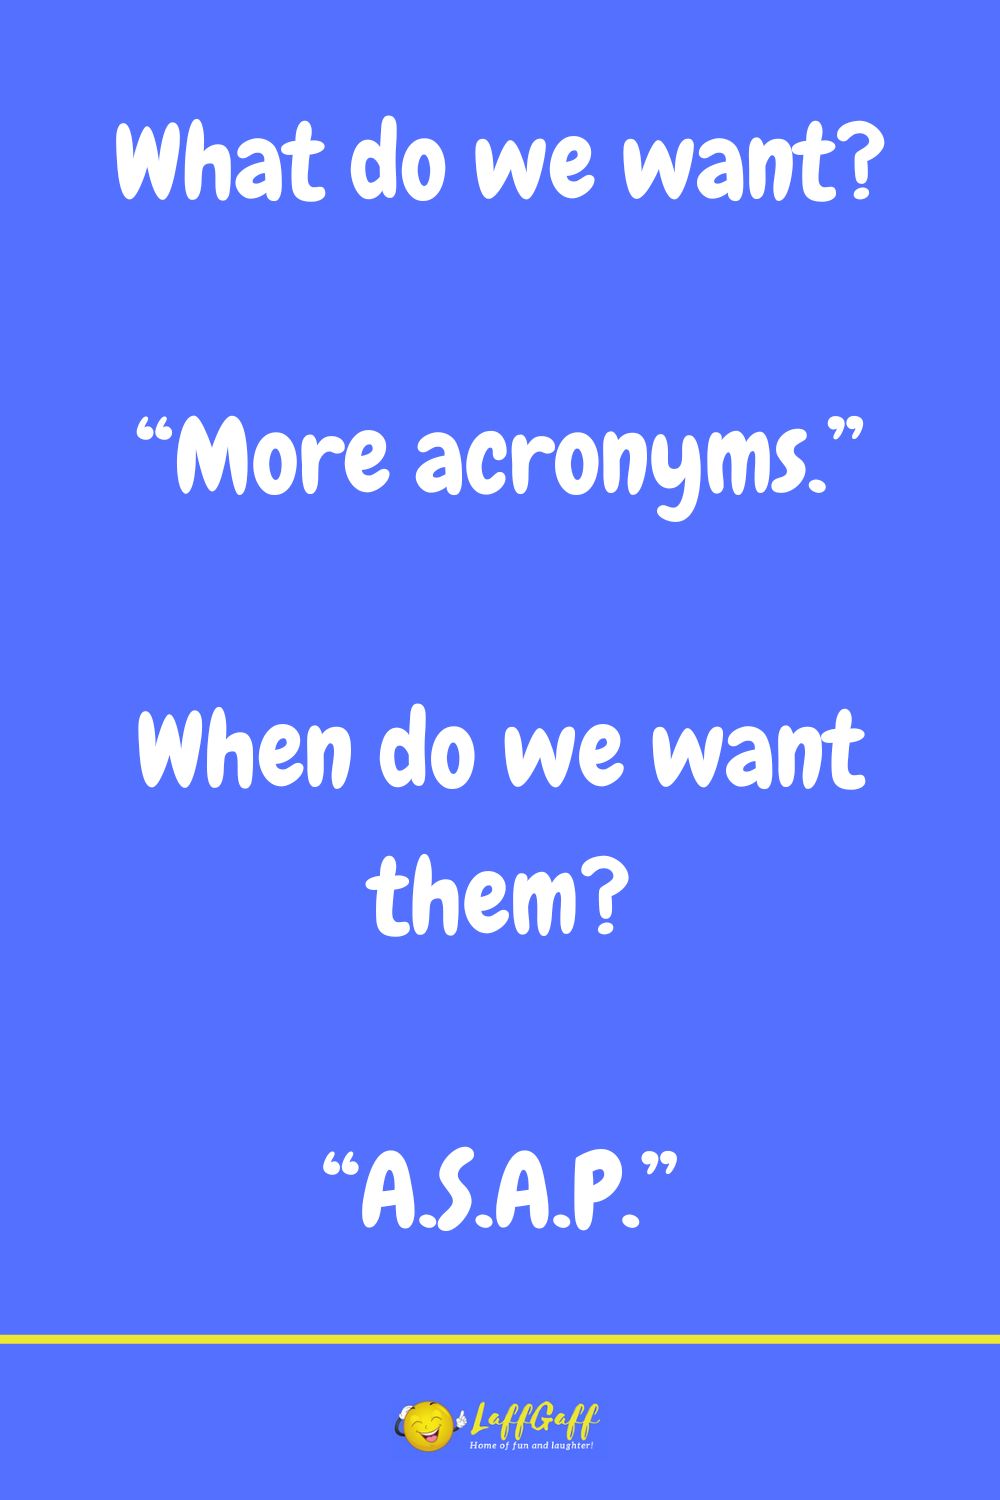 Acronyms joke from LaffGaff.